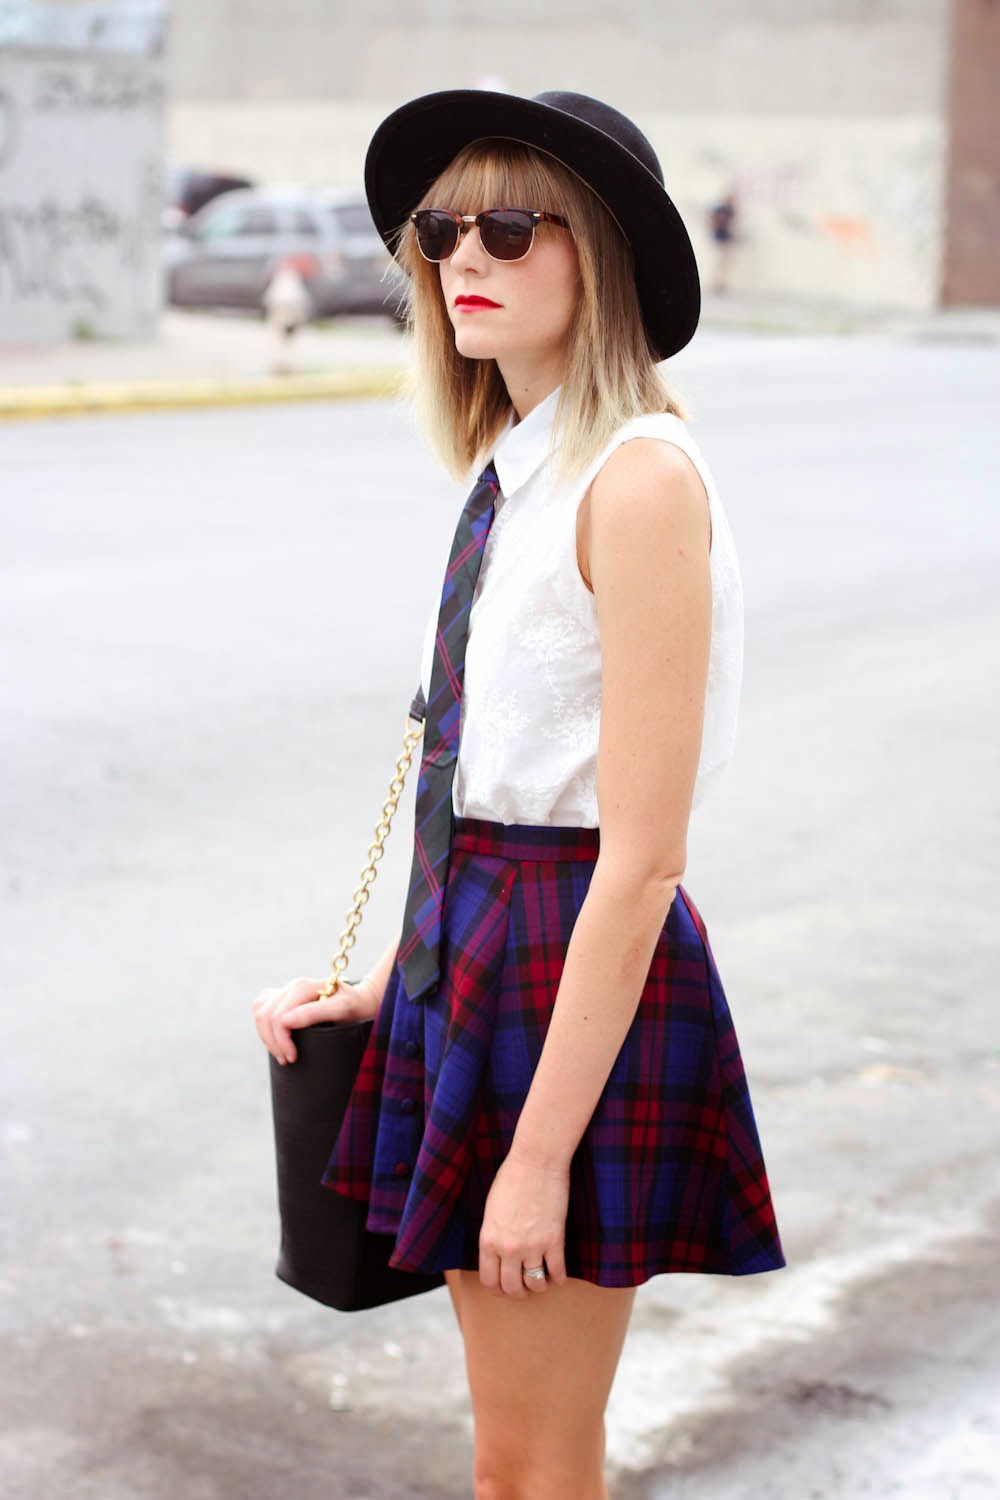 forever 21 plaid skirt, skinny tie, nyc vintage blogger, morgan avenue, dagne dover